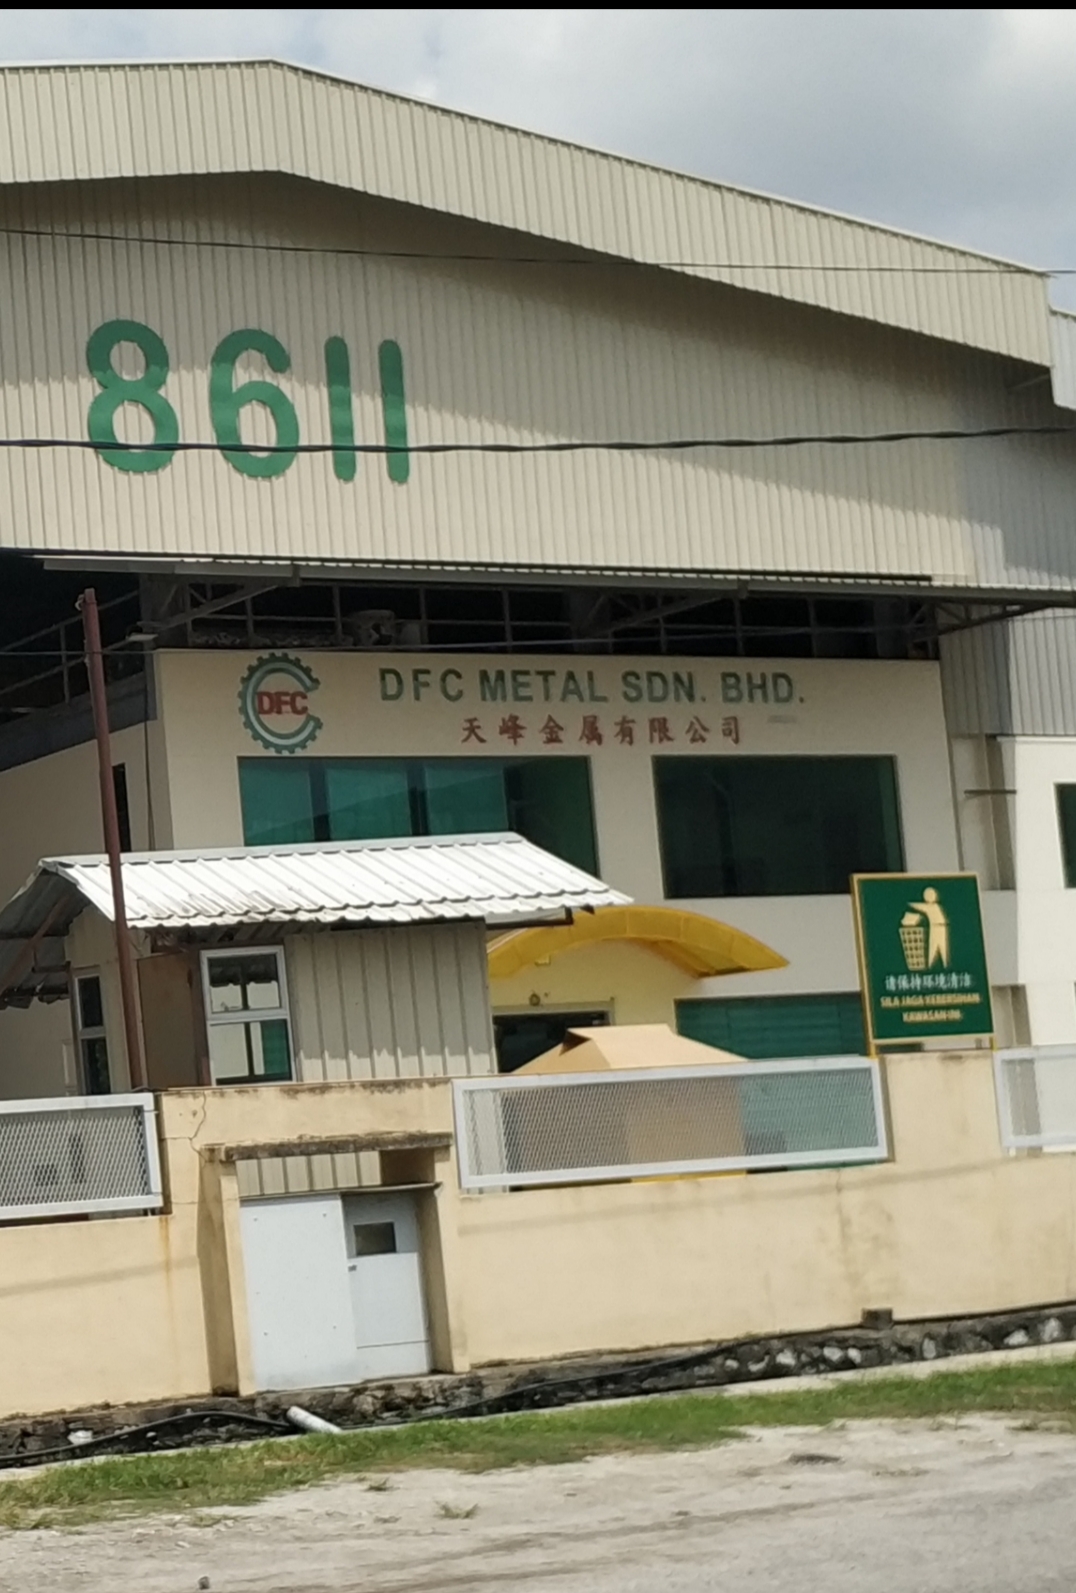 DFC Metal Sdn. Bhd.